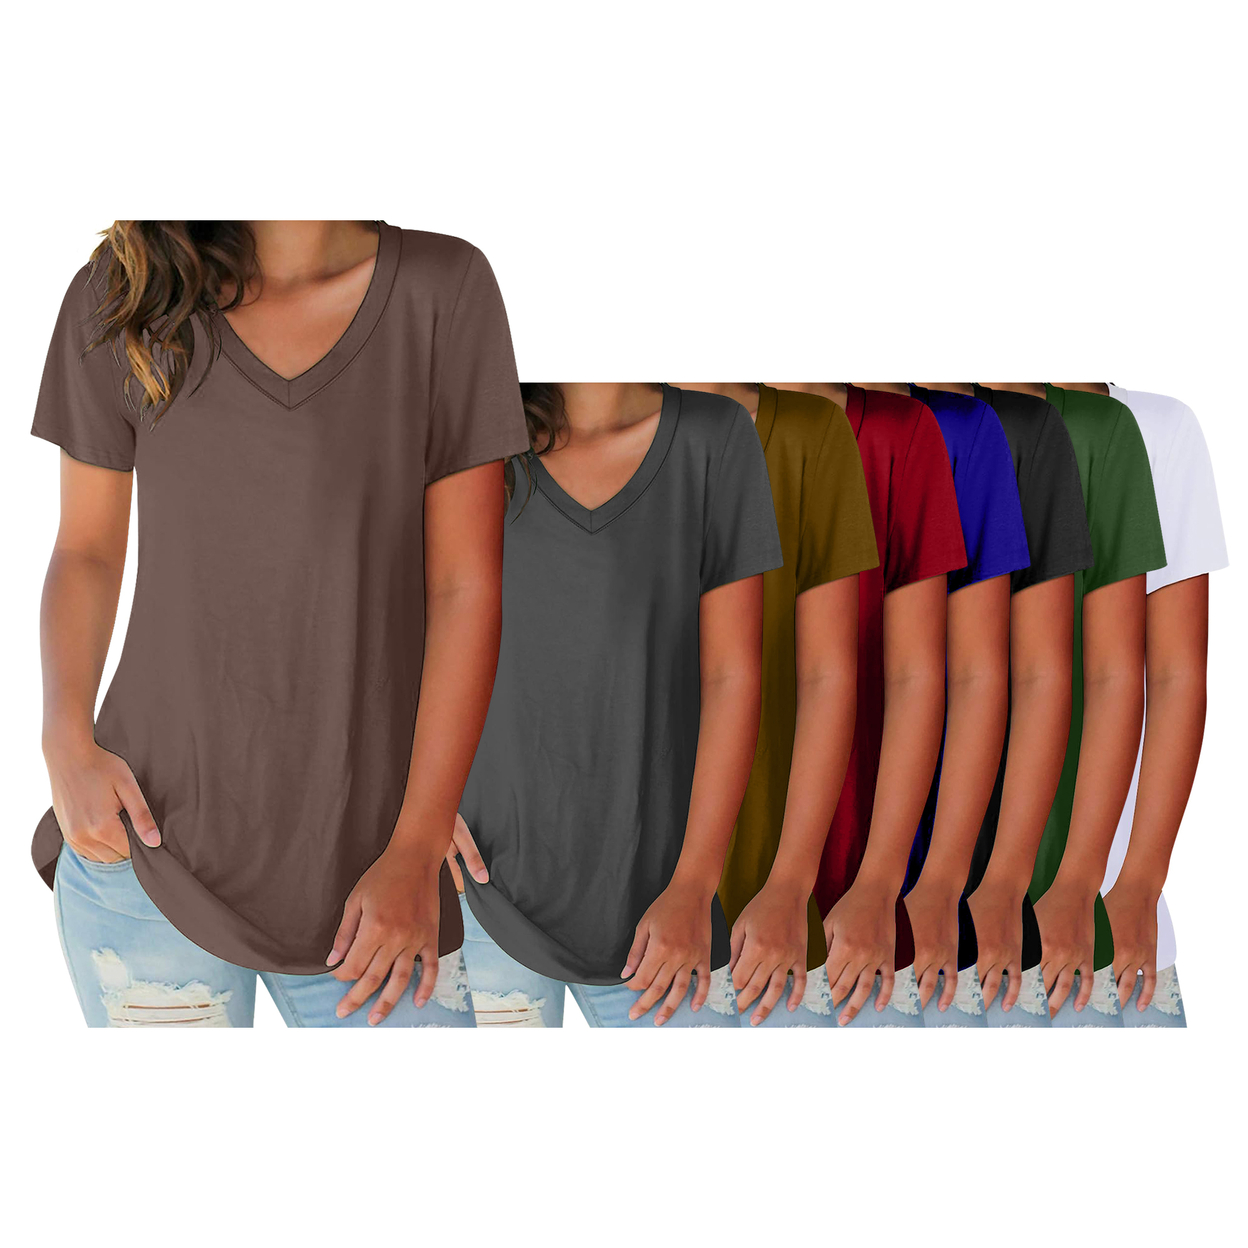 3-Pack: Women's Ultra Soft Smooth Cotton Blend Basic V-Neck Short Sleeve Shirts - Black, Grey, Green, Medium